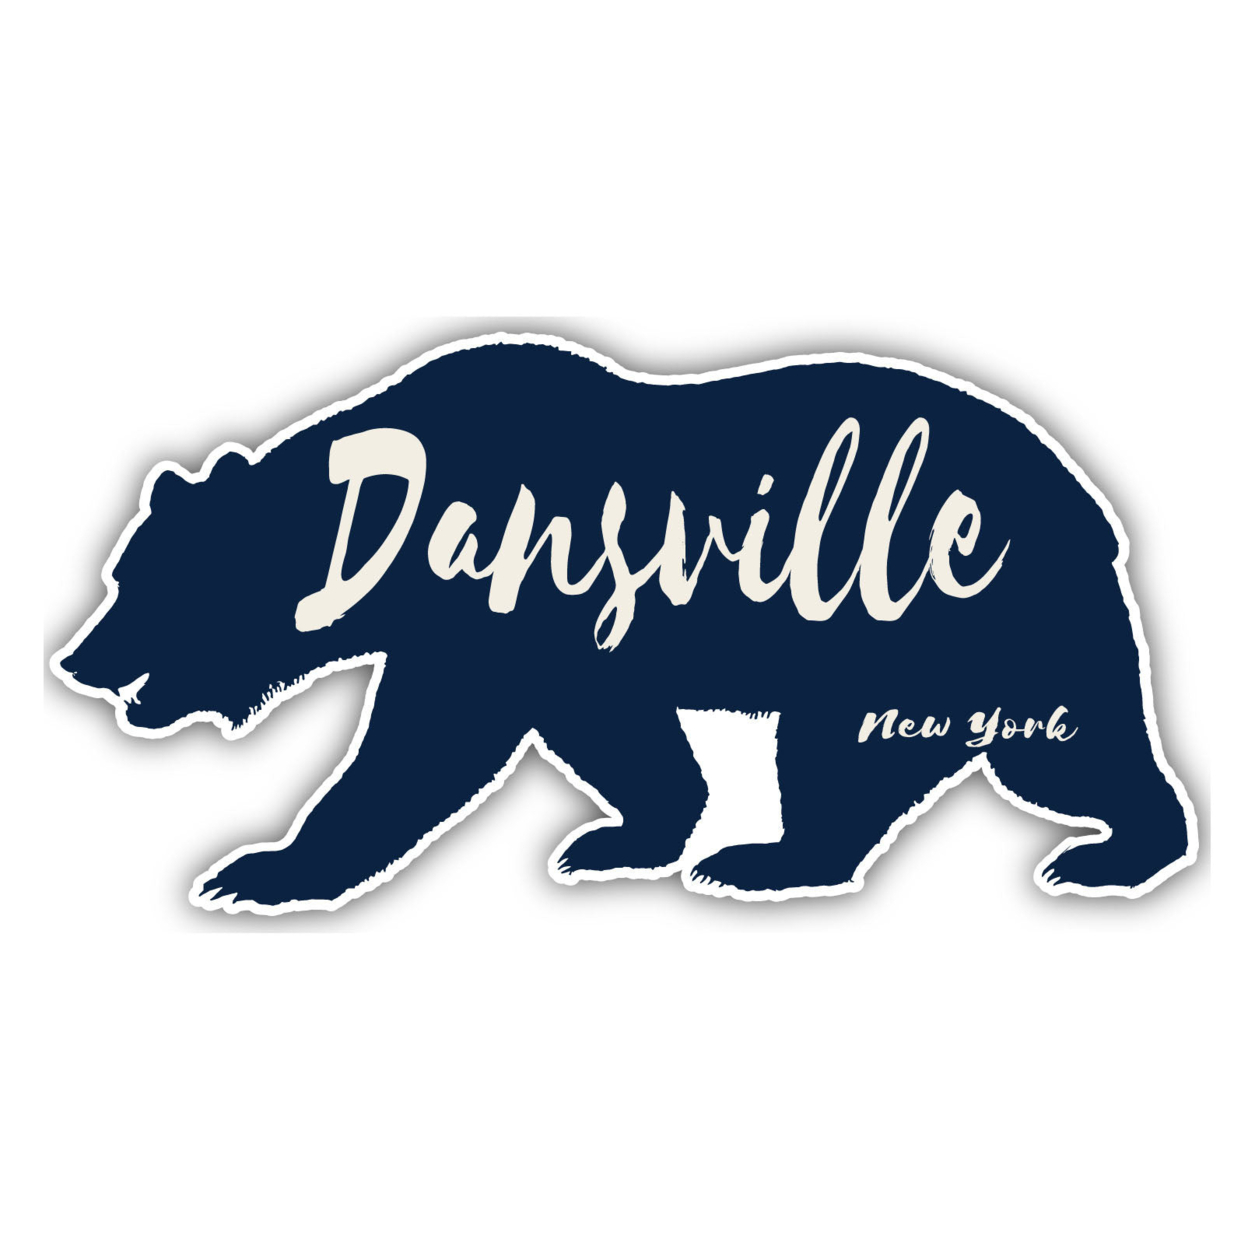 Dansville New York Souvenir Decorative Stickers (Choose Theme And Size) - Single Unit, 8-Inch, Bear